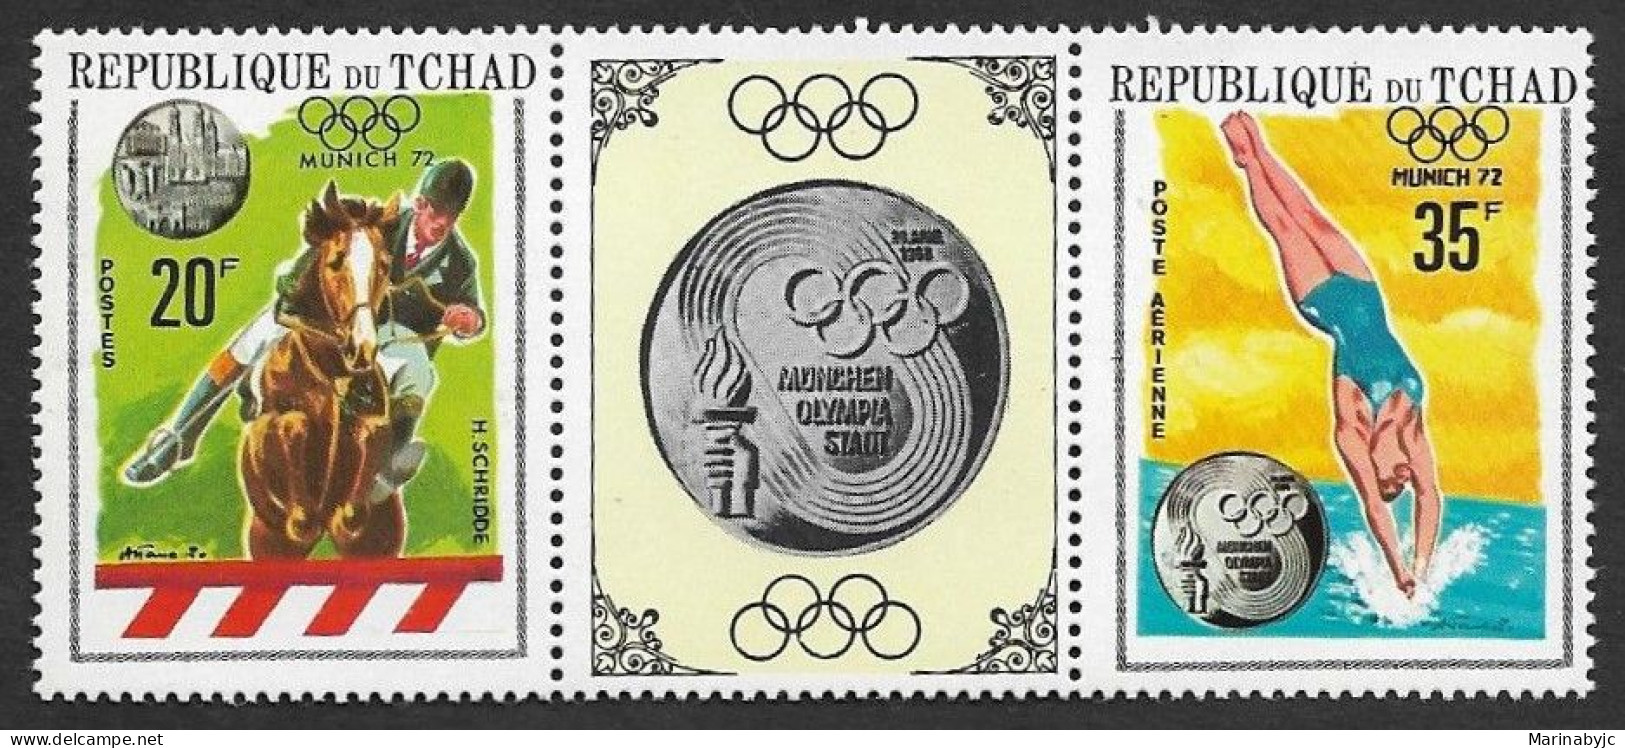 SD)1972 CHAD SPORTS SERIES, OLYMPIC GAMES MUNICH, GERMAN R. F. WINNERS, STRIP OF 3 MNH STAMPS - Tchad (1960-...)